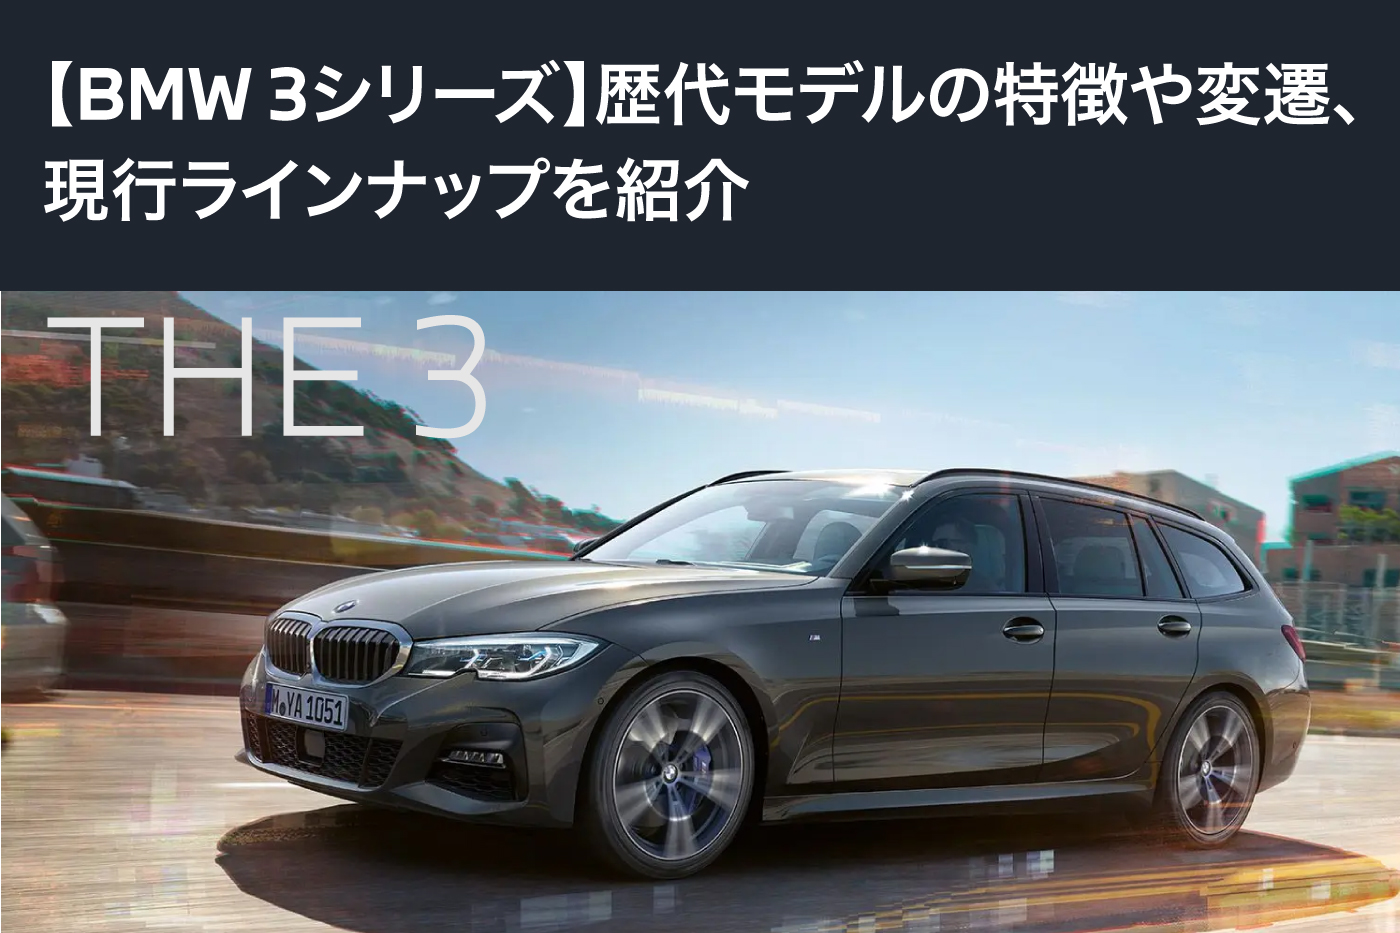 BMW 3シリーズ】歴代モデルの特徴や変遷、現行ラインナップを紹介